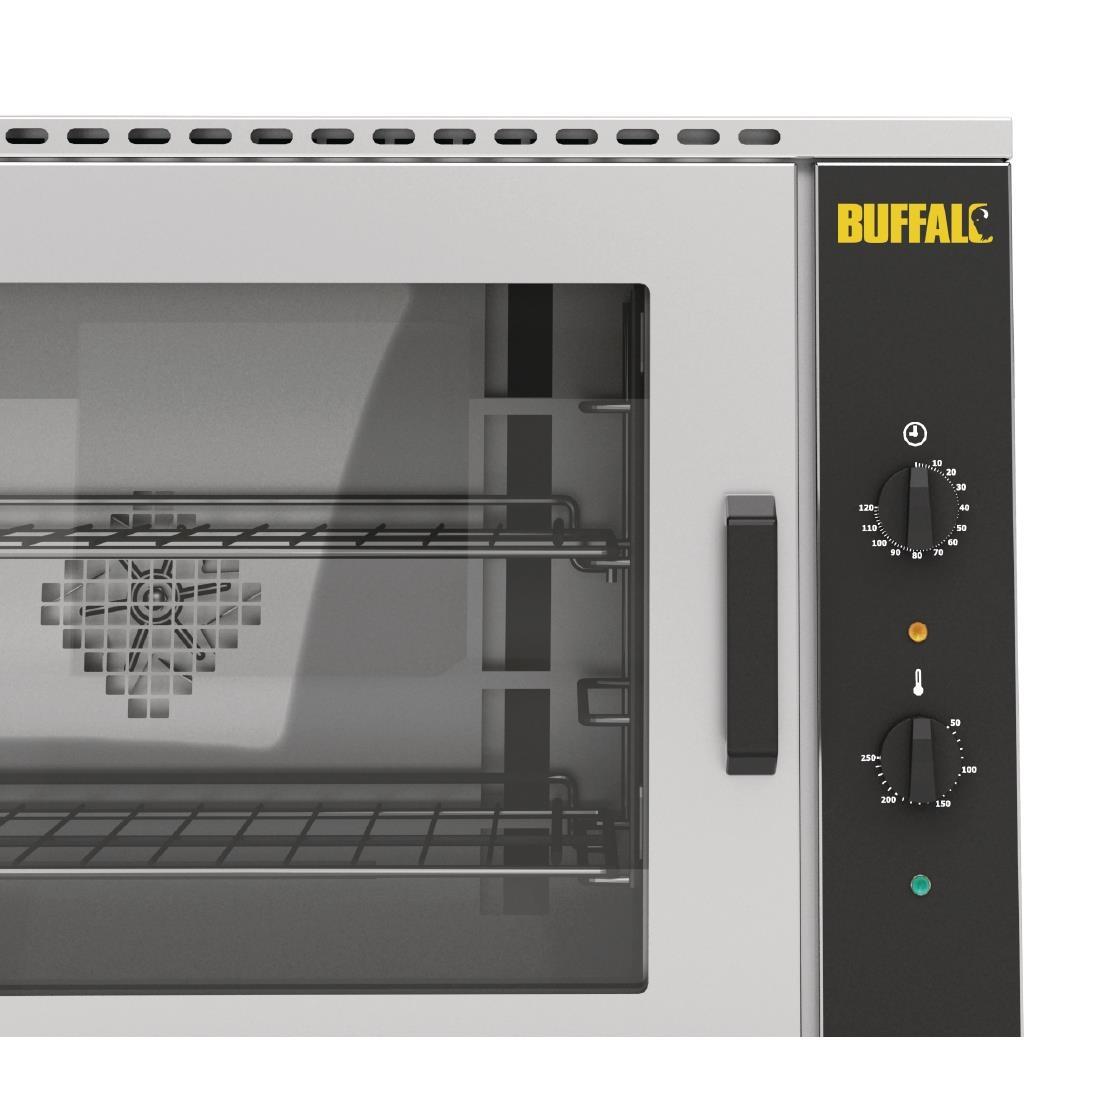 Buffalo Convection Oven 100Ltr - CW864  - 3